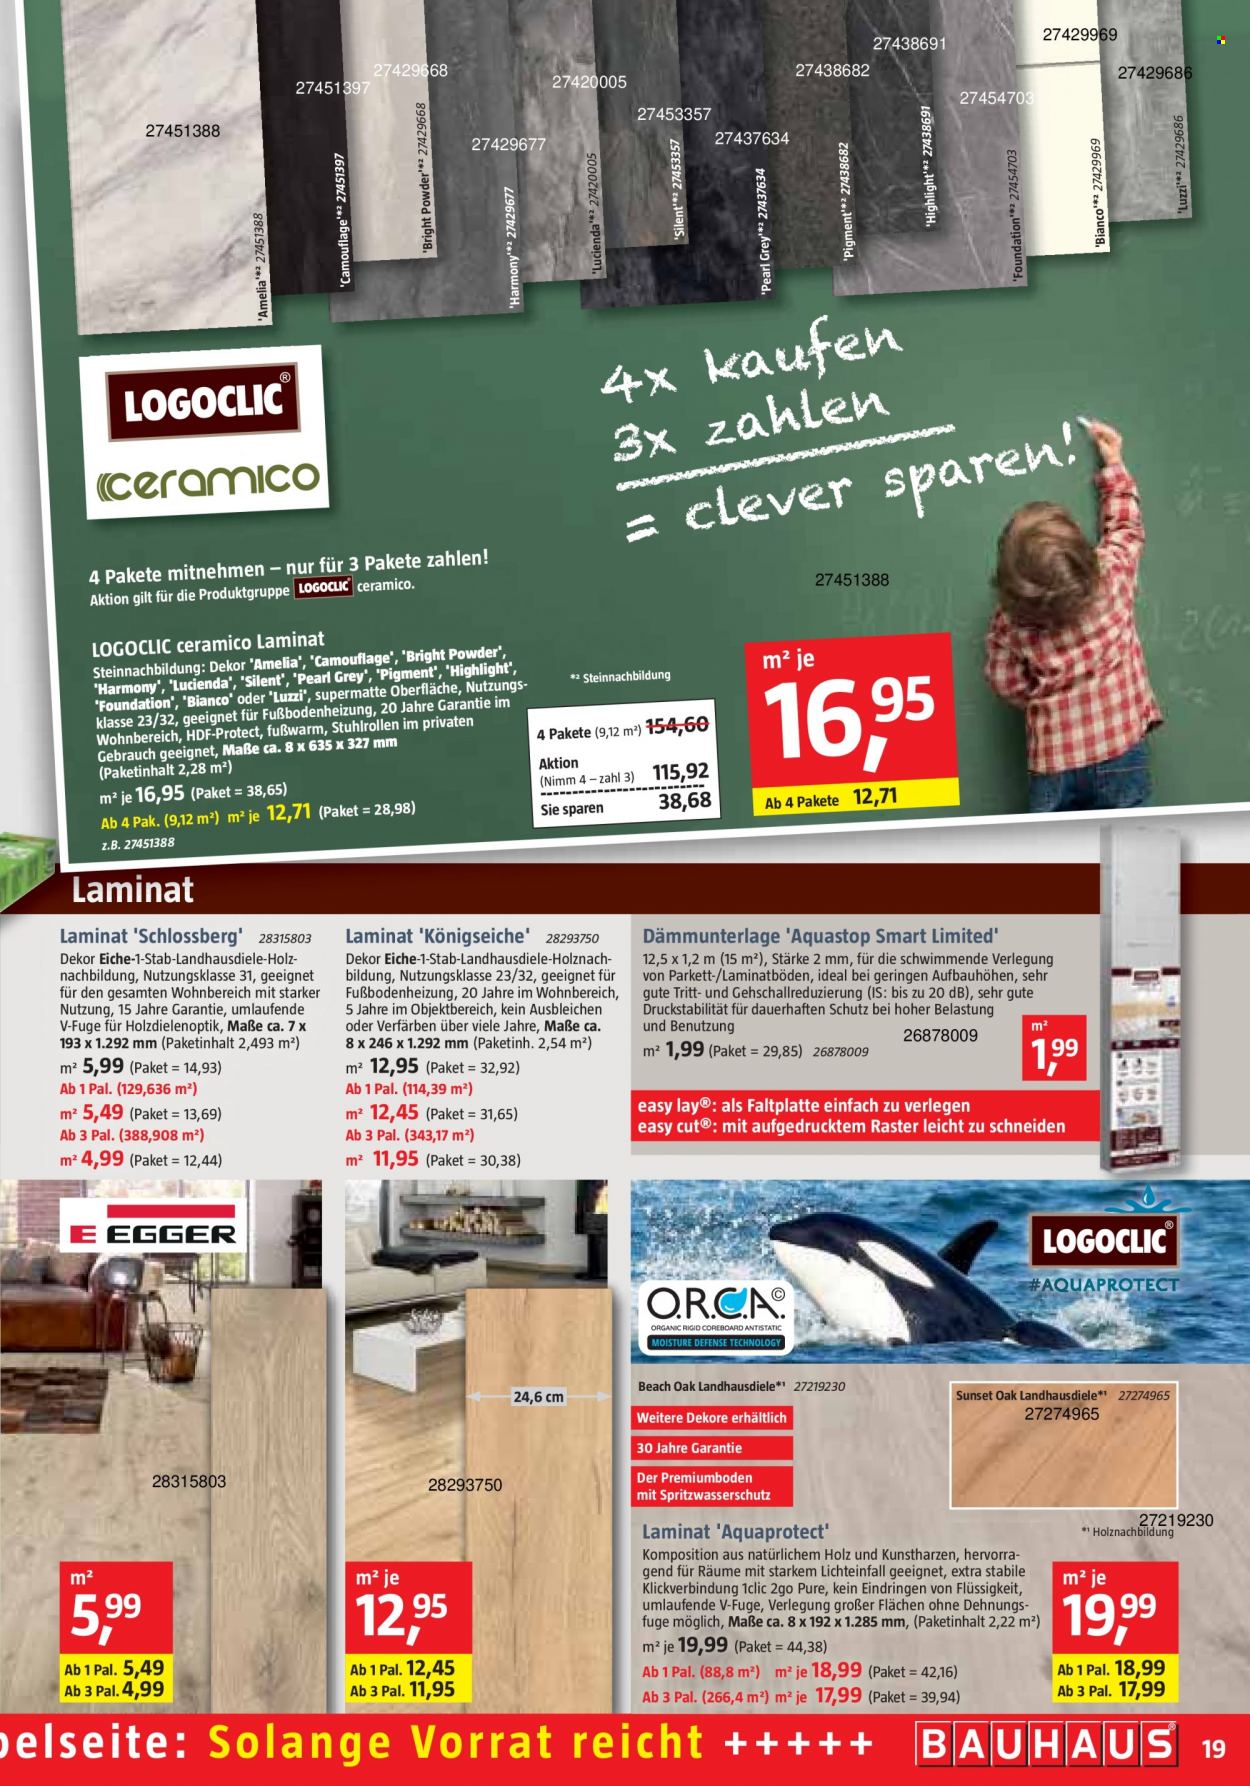 thumbnail - Prospekte Bauhaus - 4.09.2021 - 2.10.2021 - Produkte in Aktion - Logoclic, Laminatboden, Laminat, Dämmunterlage, Holz. Seite 19.